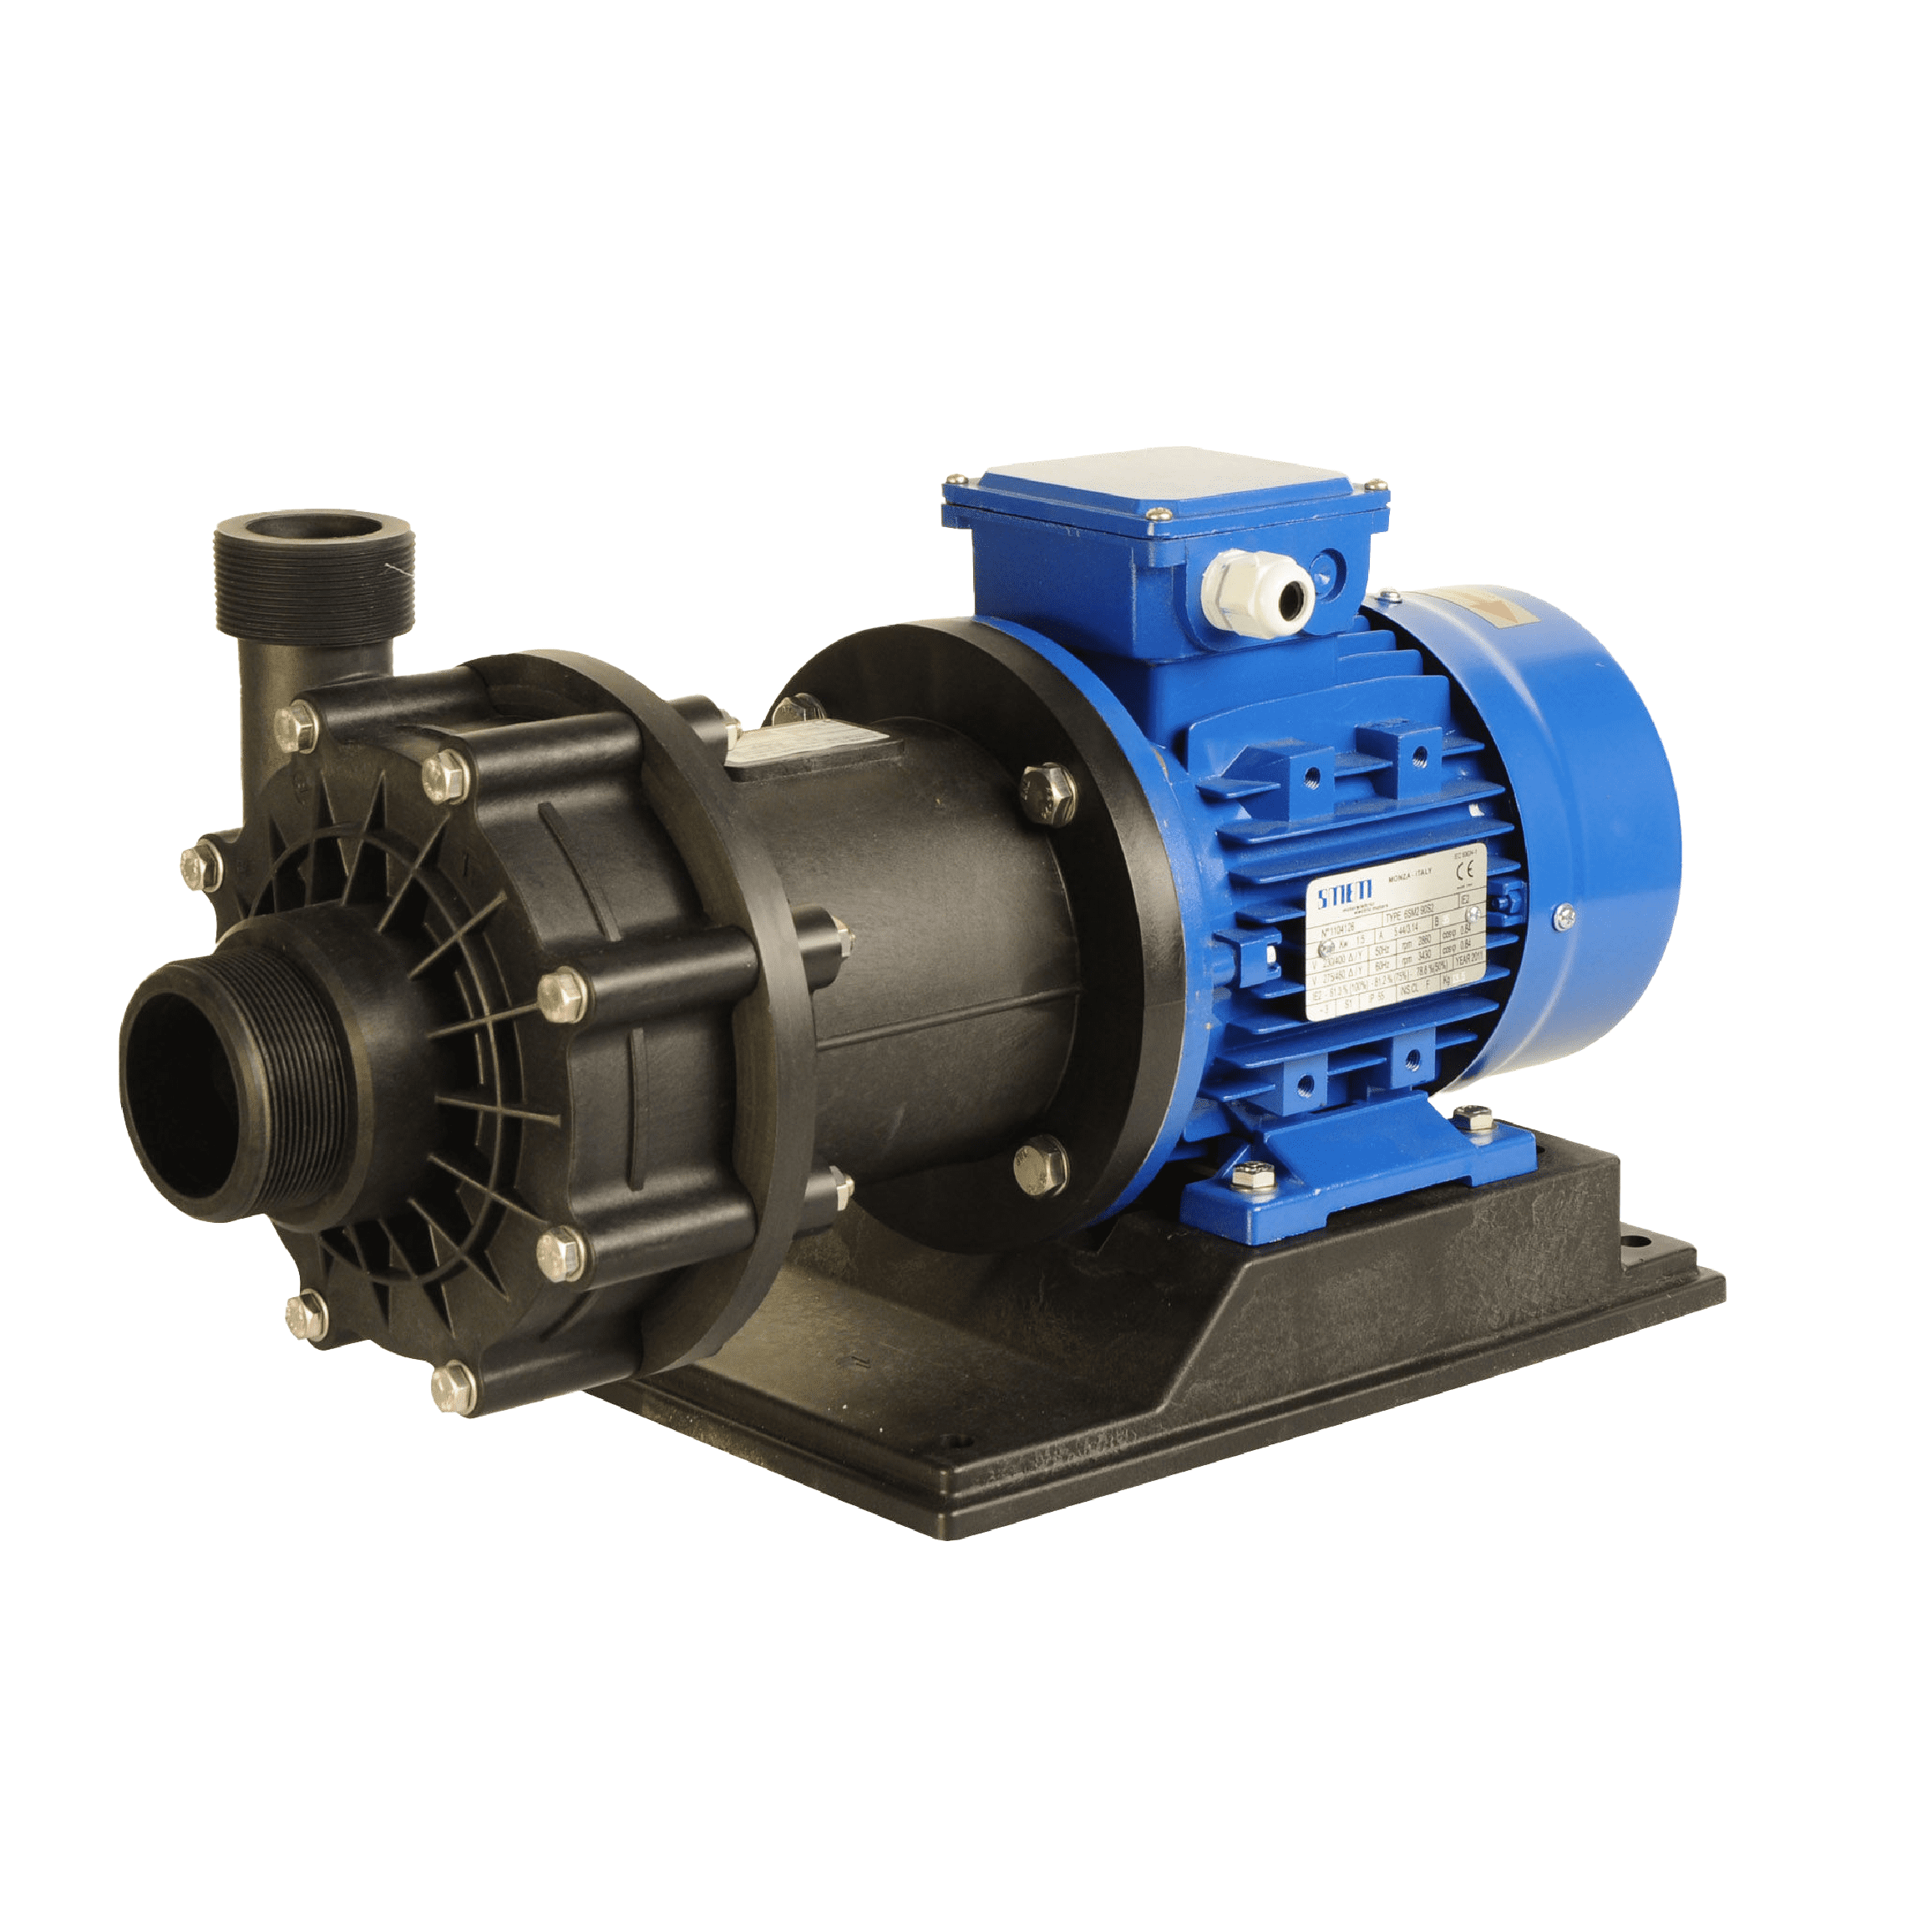 HCO – Mechanical seal centrifugal pumps